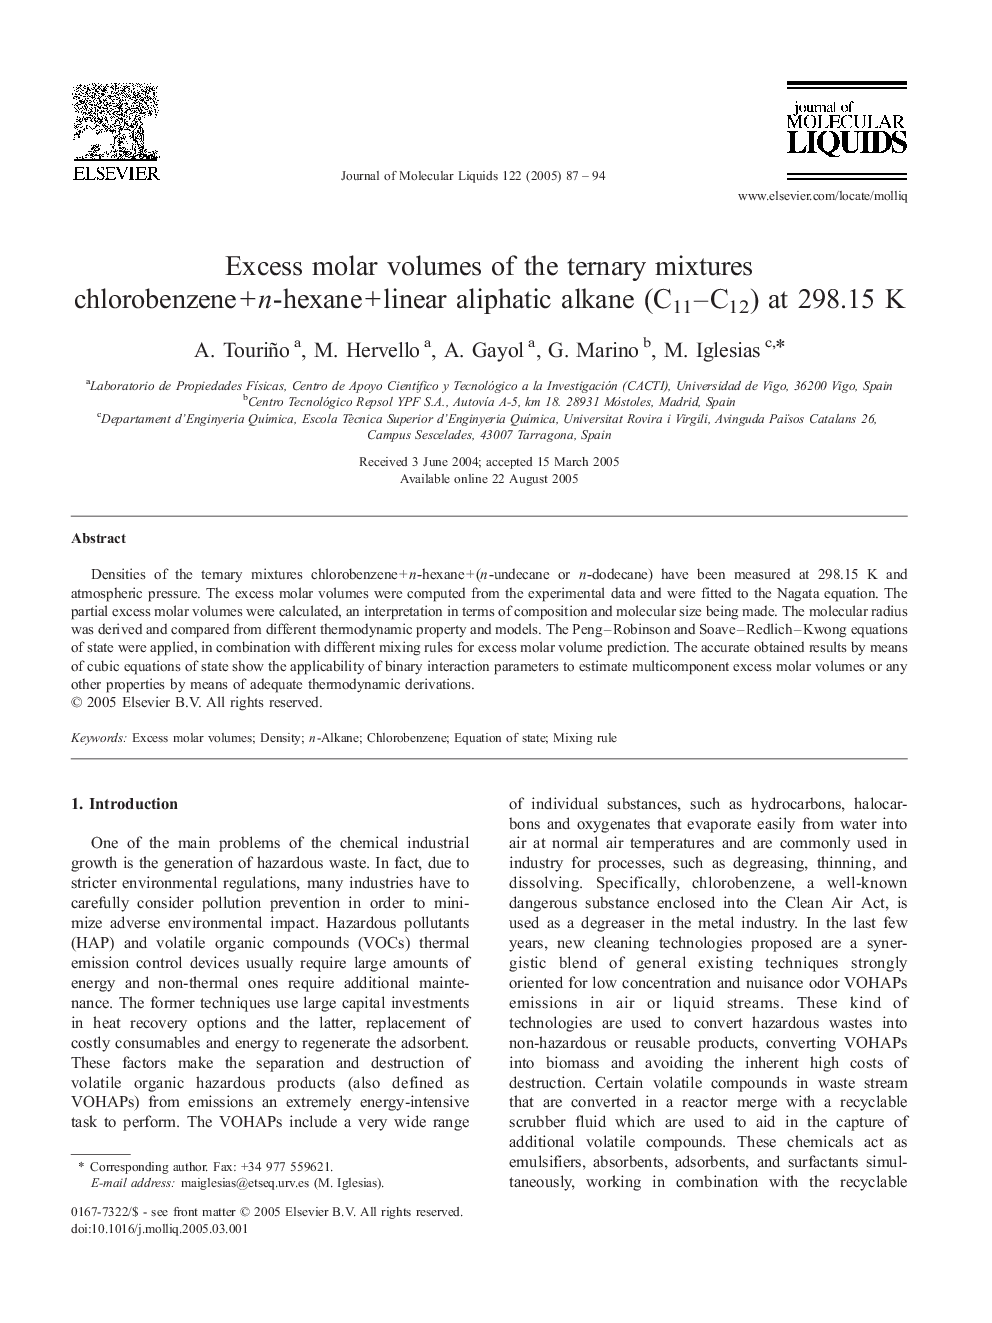 Excess molar volumes of the ternary mixtures chlorobenzeneÂ +Â n-hexaneÂ +Â linear aliphatic alkane (C11-C12) at 298.15 K